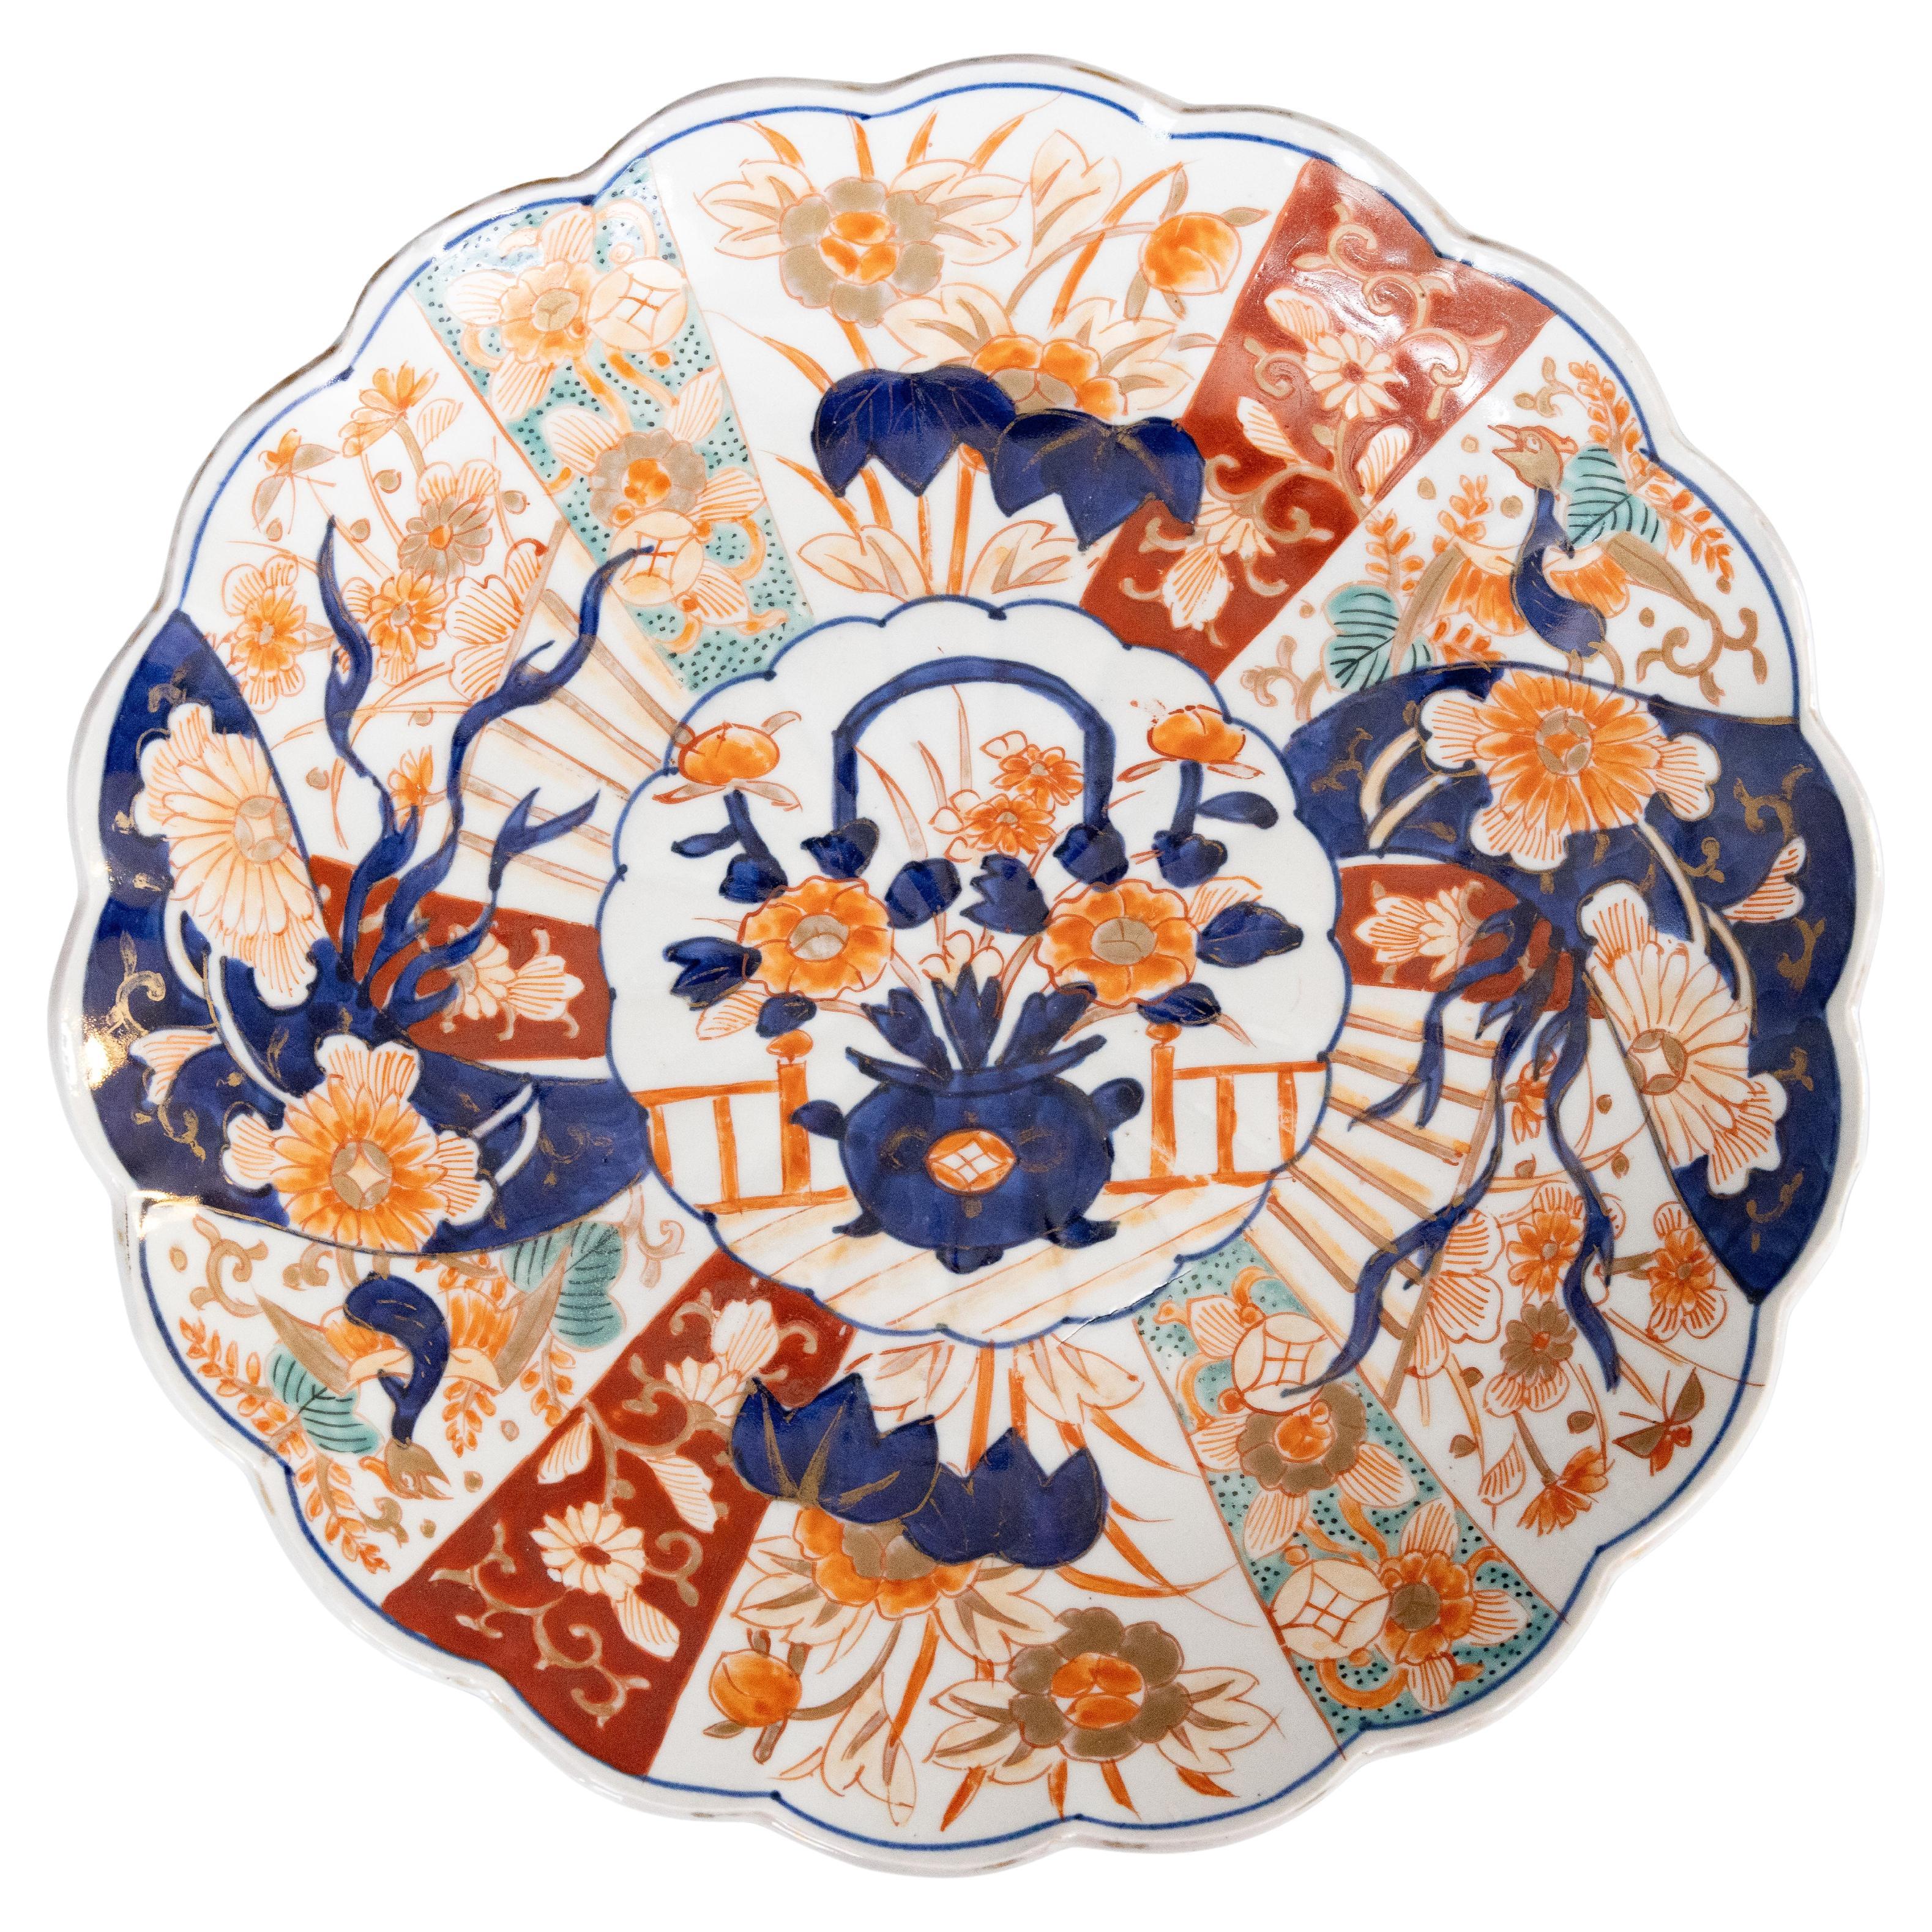 19th Century Japanese Meiji Period Imari Scalloped Charger Plate